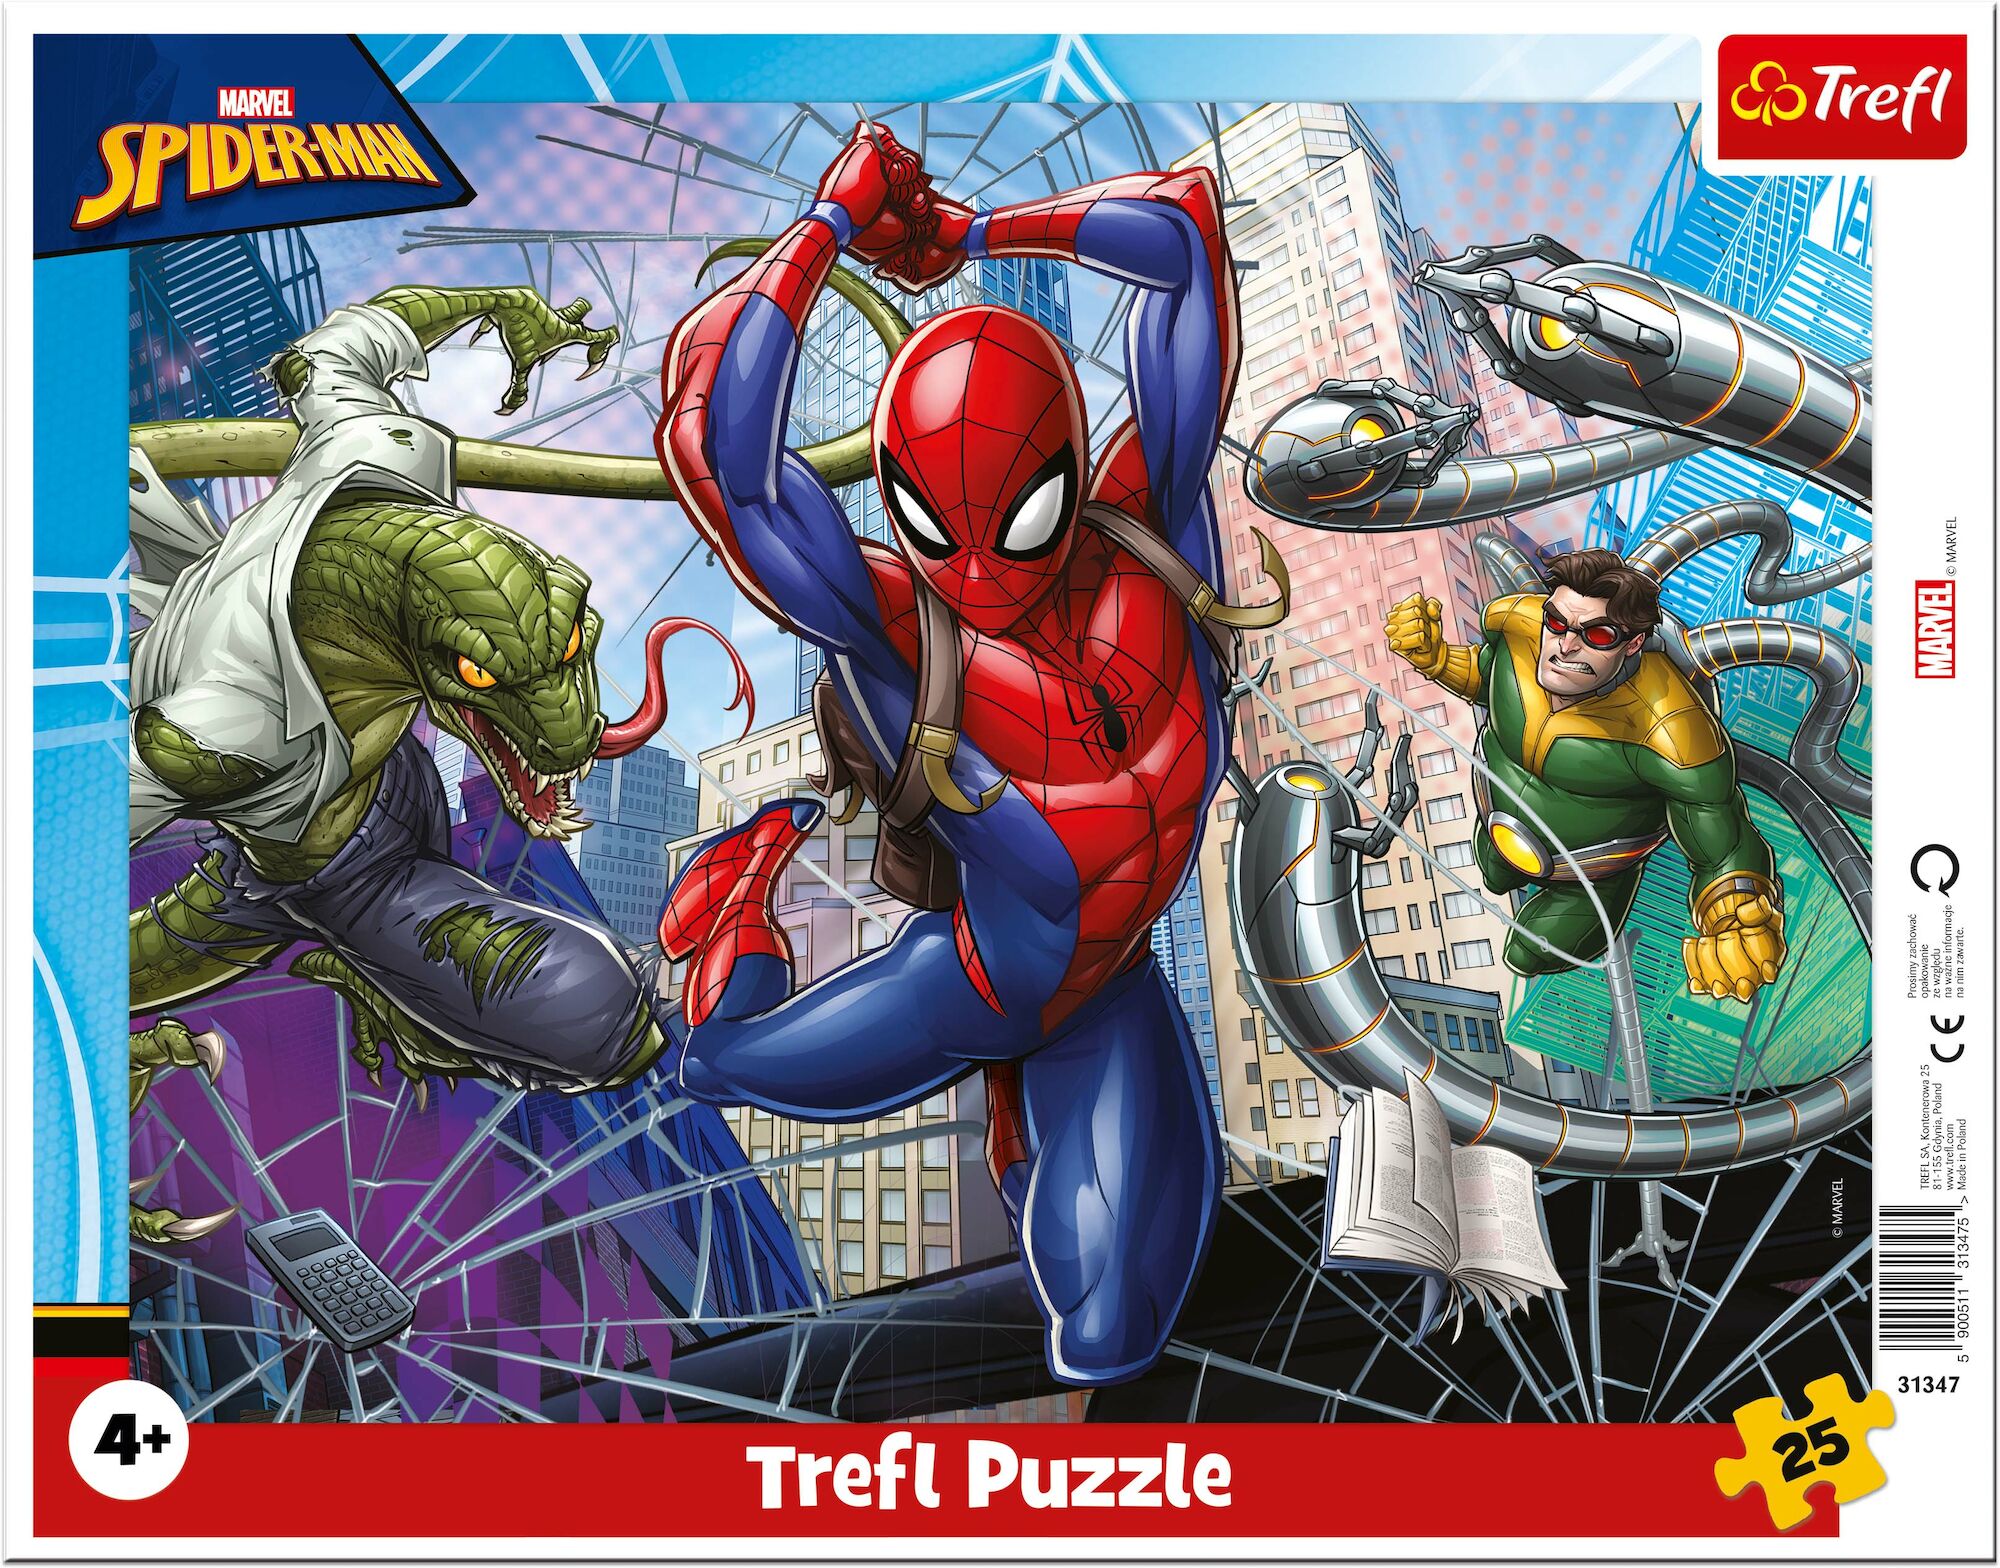 Trefl Spider-Man Puzzle 25 Teile